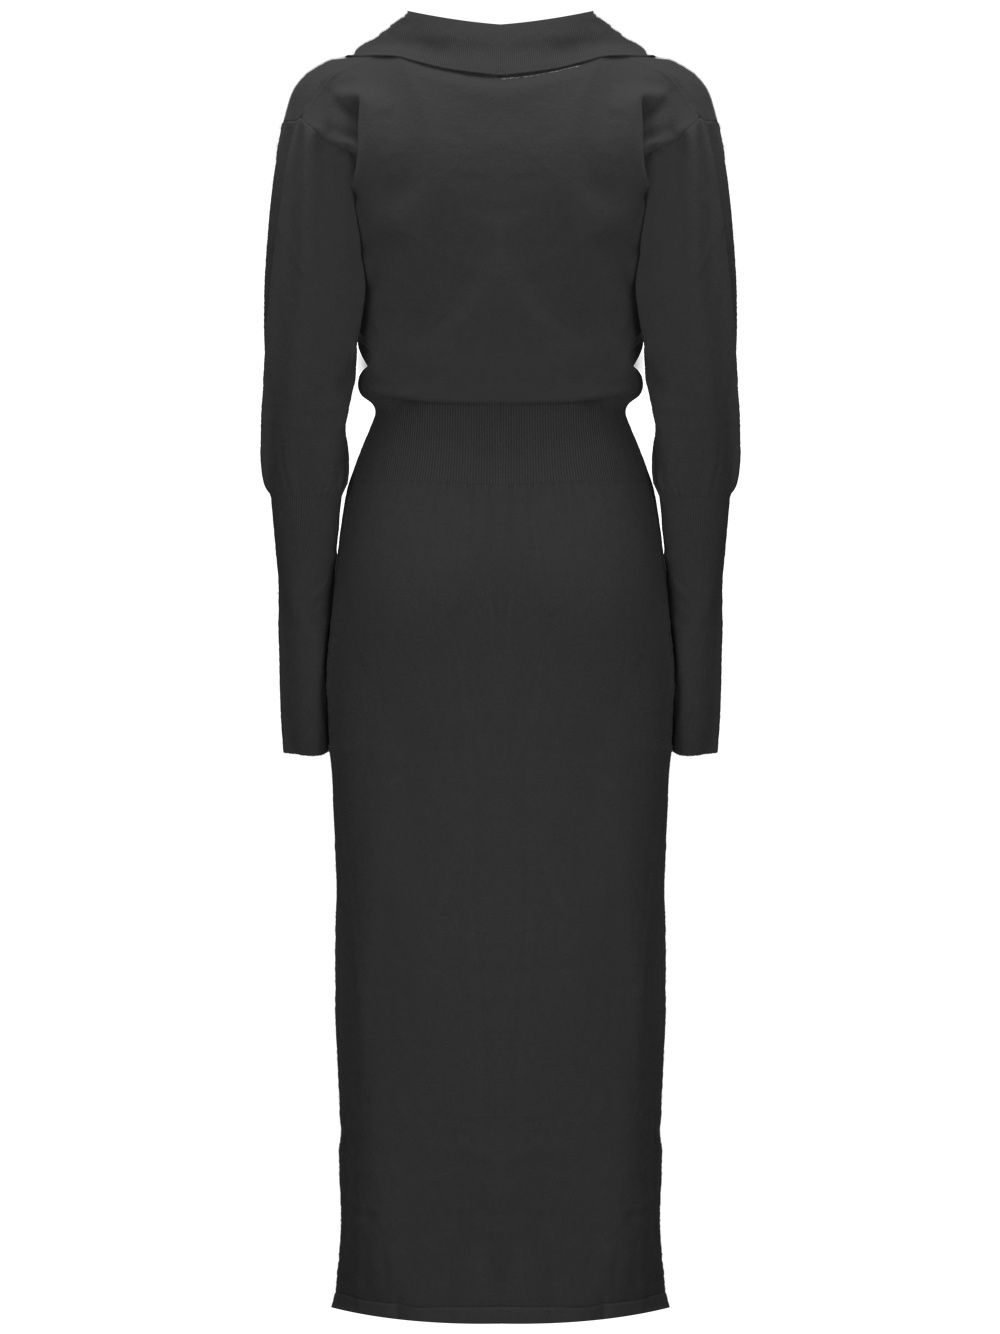 Black knitted dress